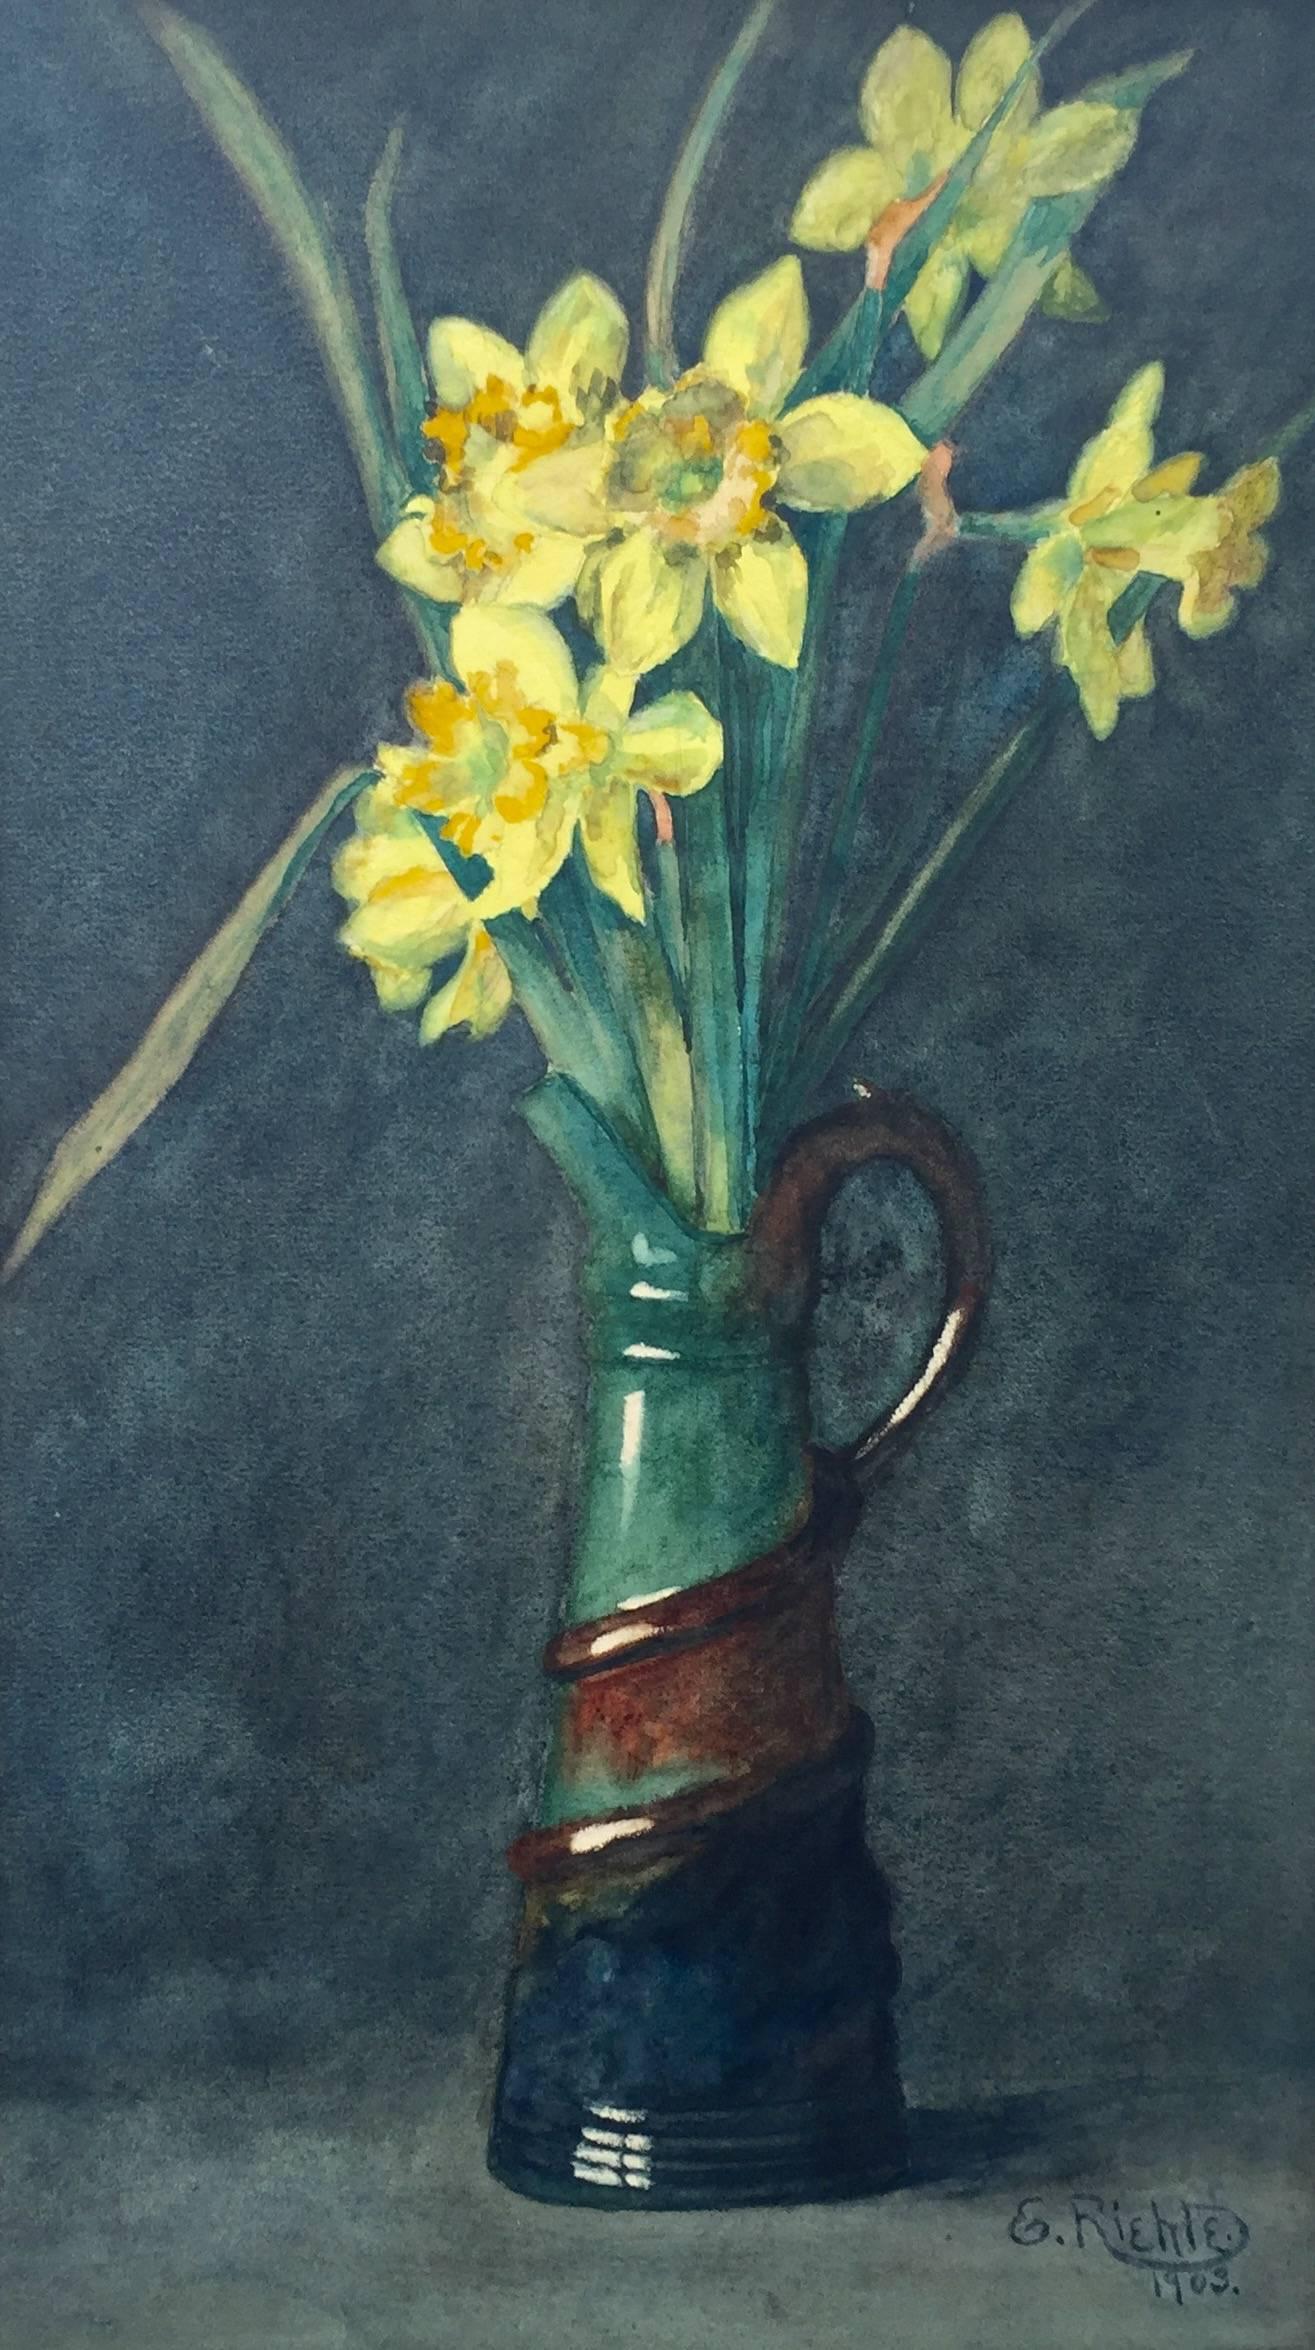 Unknown Still-Life - "Daffodils in Ceramic Pitcher"